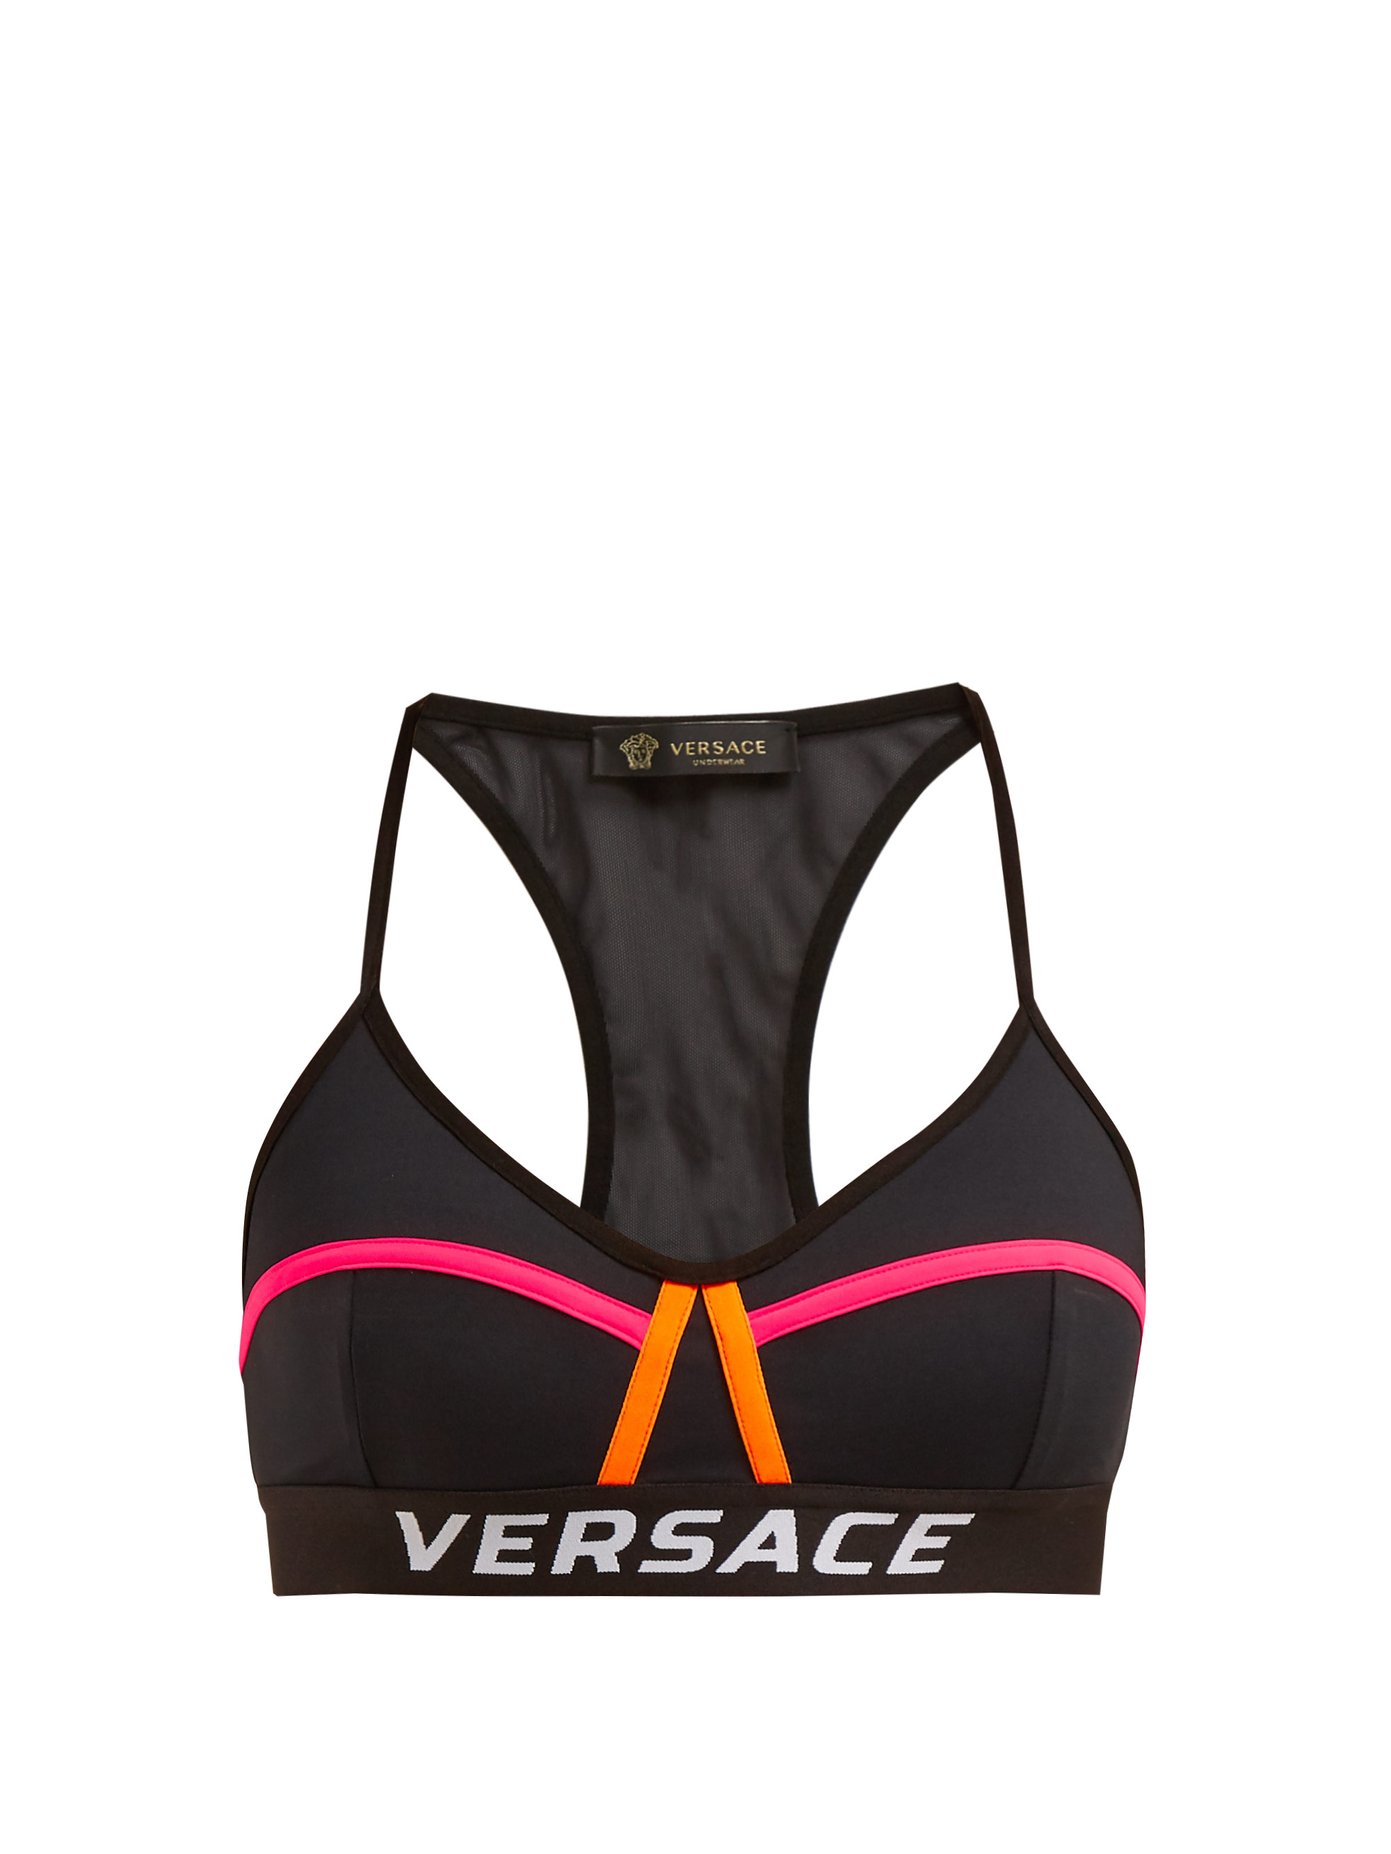 Versace ヴェルサーチェ ロゴプリント ストレッチジャージー スポーツブラ Matchesfashion マッチズファッション